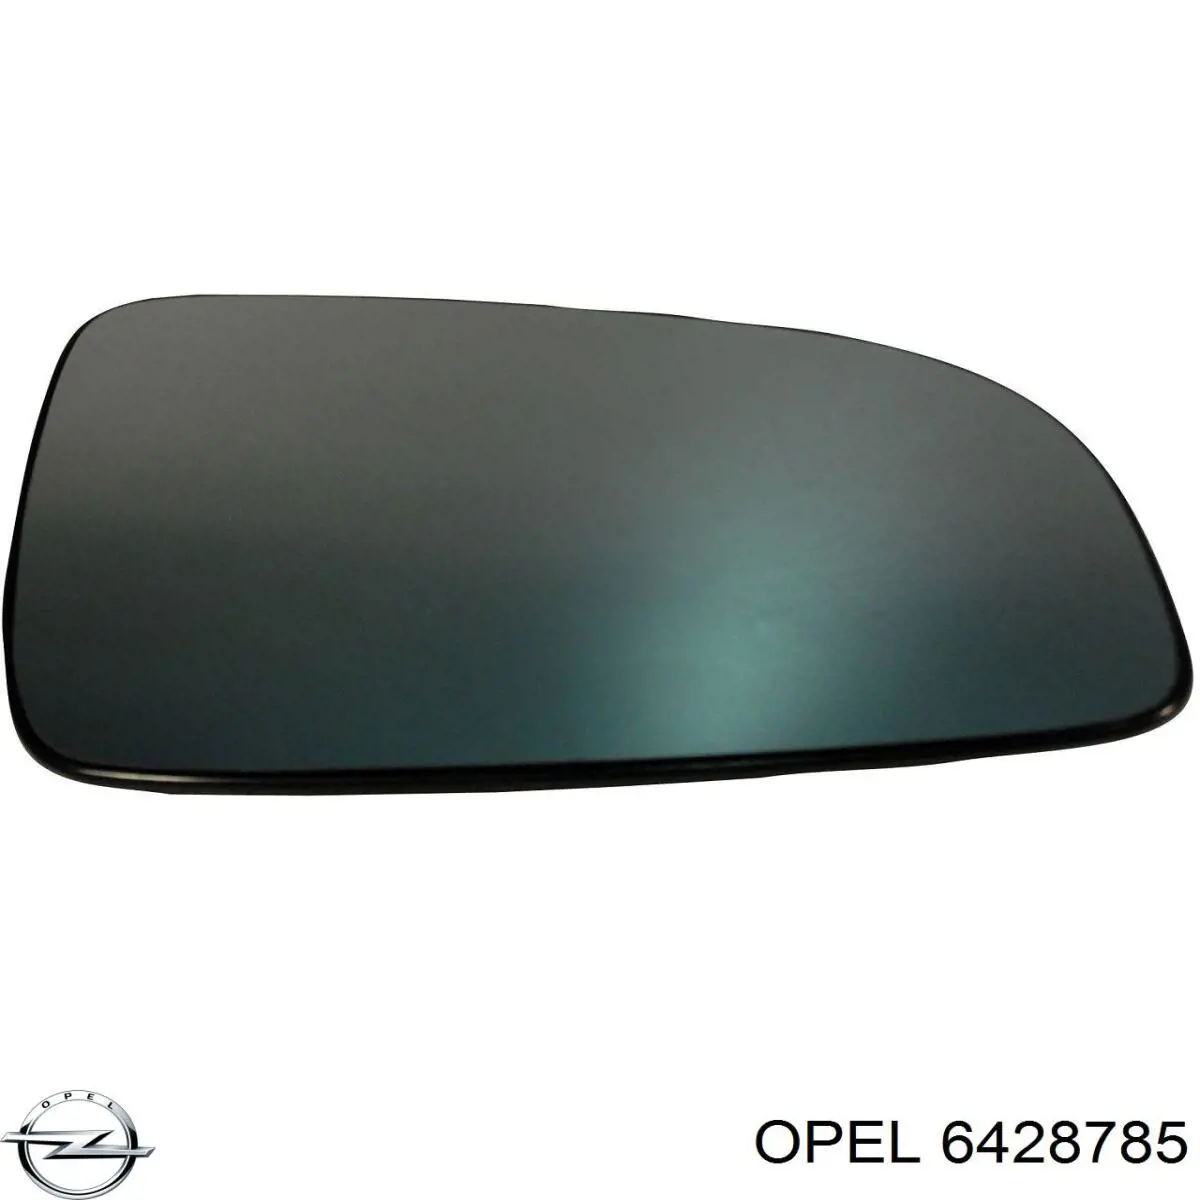 6428785 Opel cristal de espejo retrovisor exterior derecho